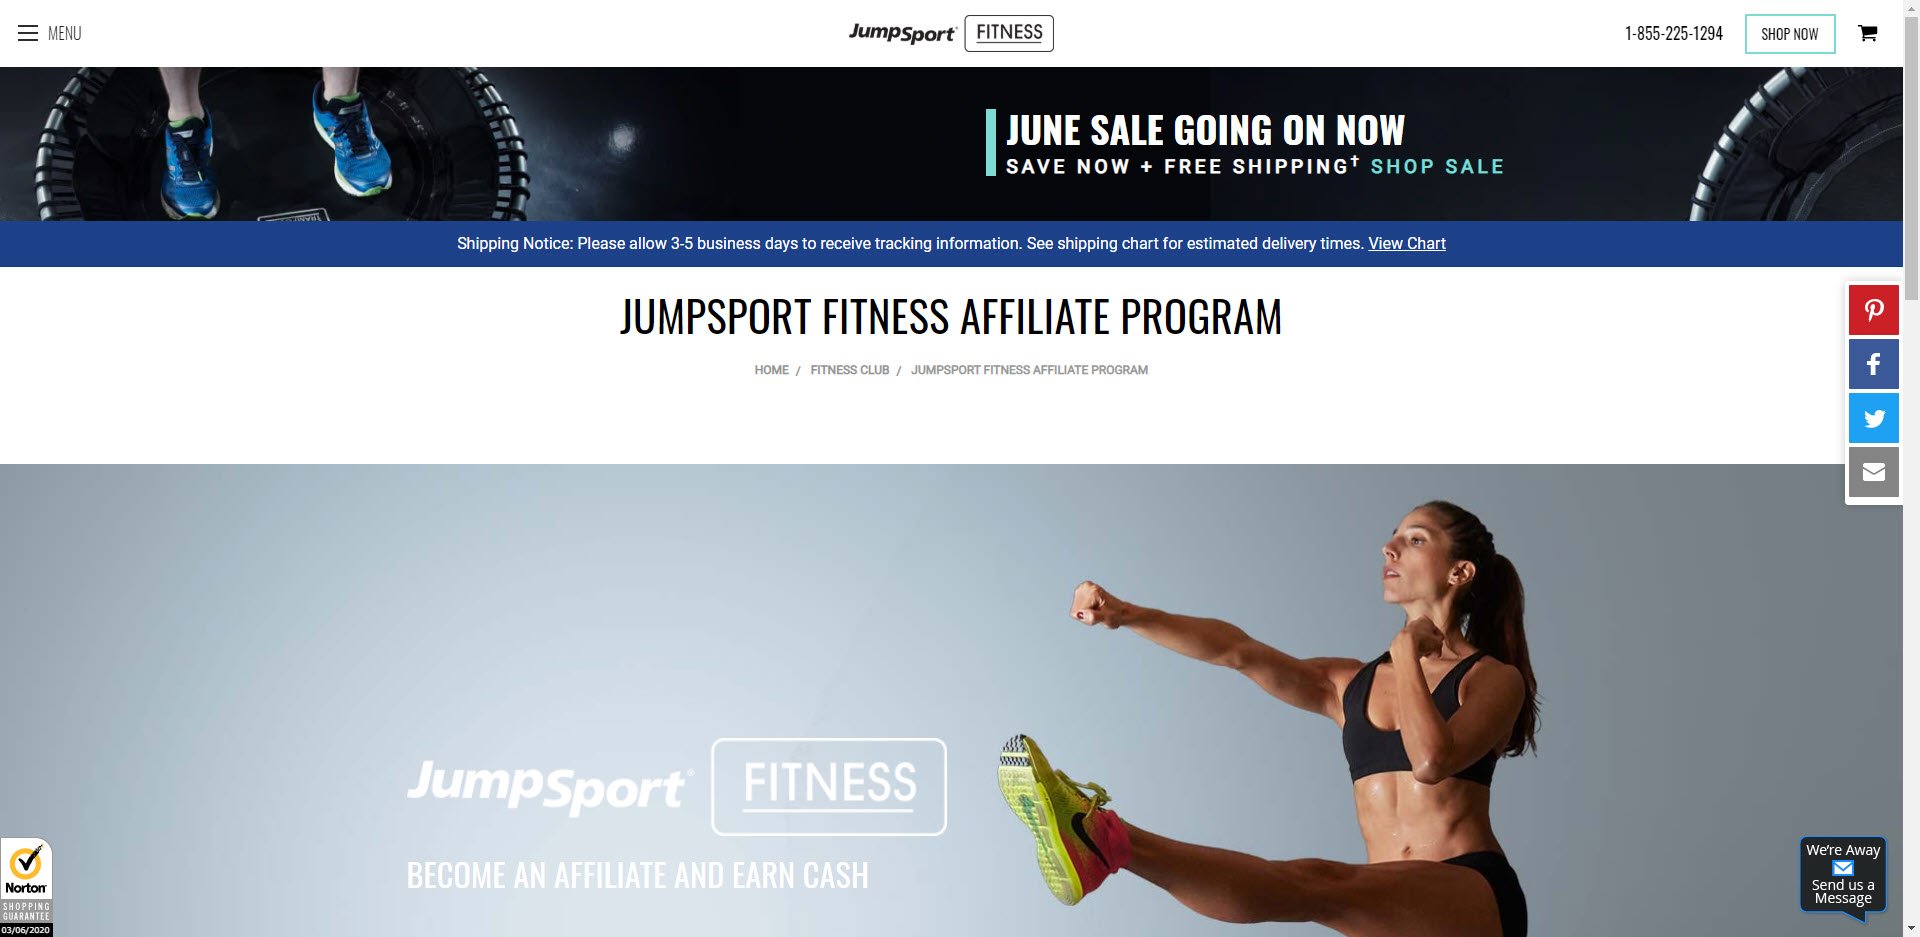 Best Fitness Affiliate Programs 2019 - Jumpsport affiliate